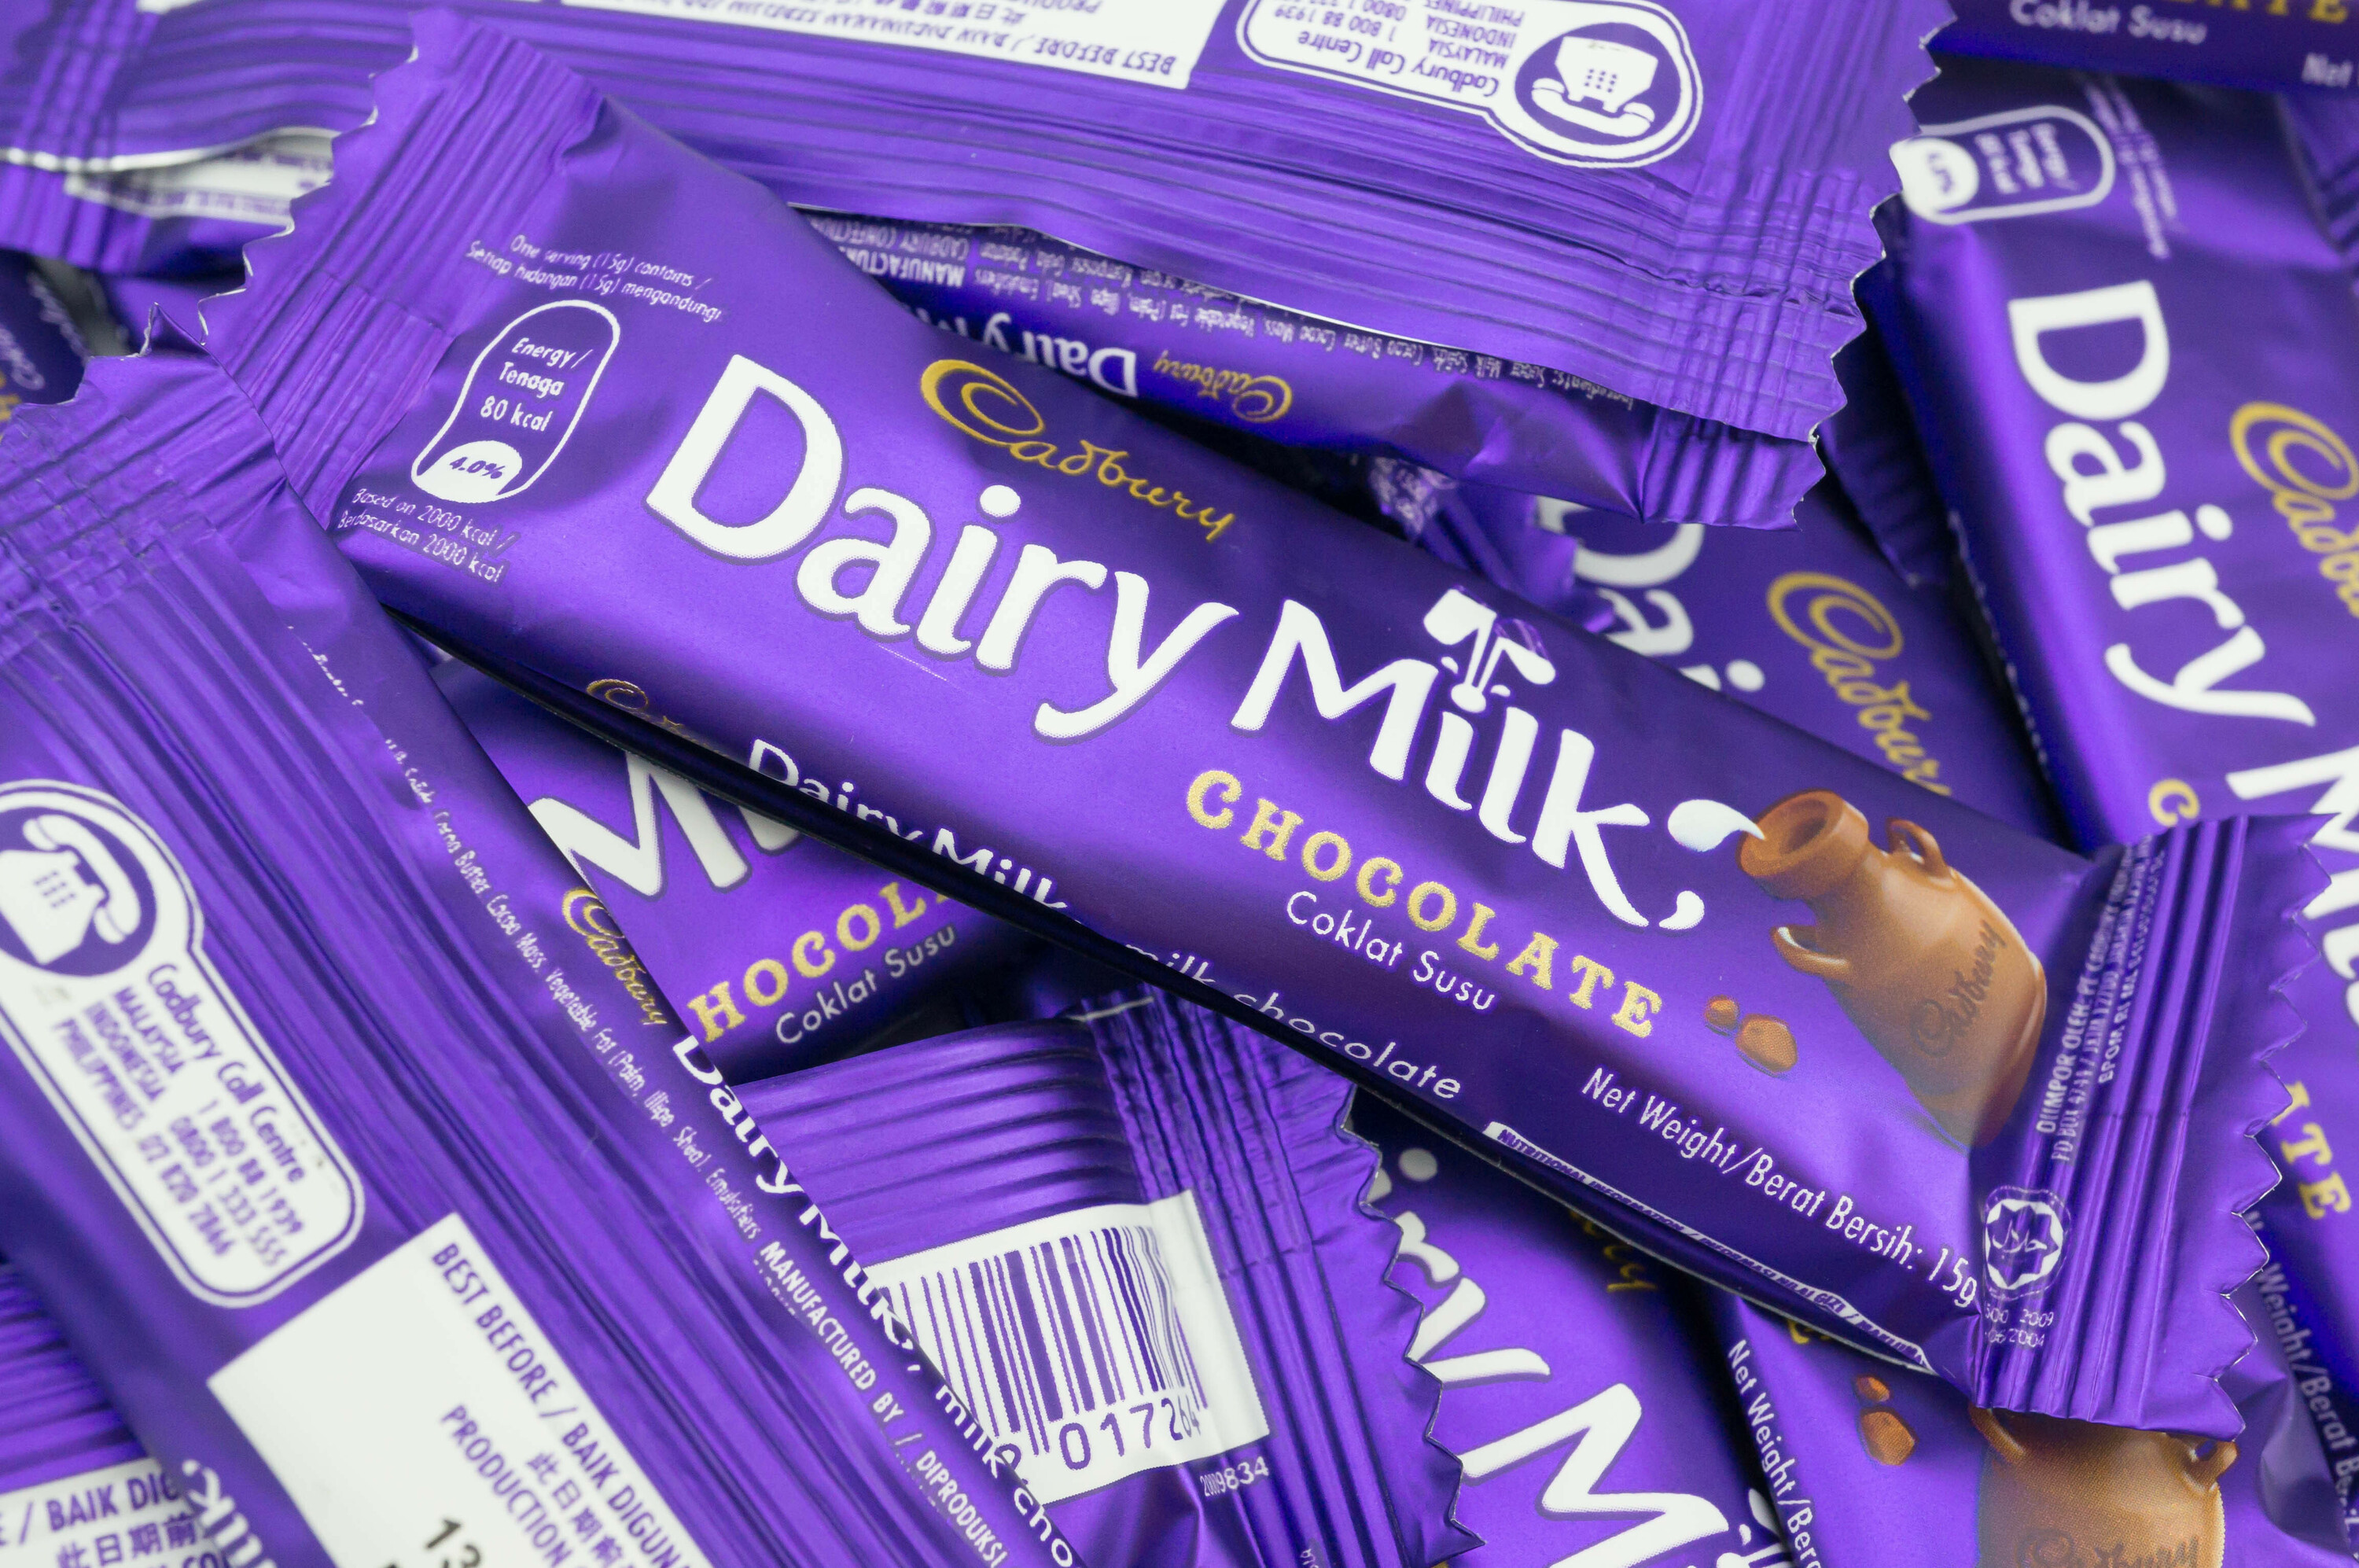 Cadburys milk chocolate